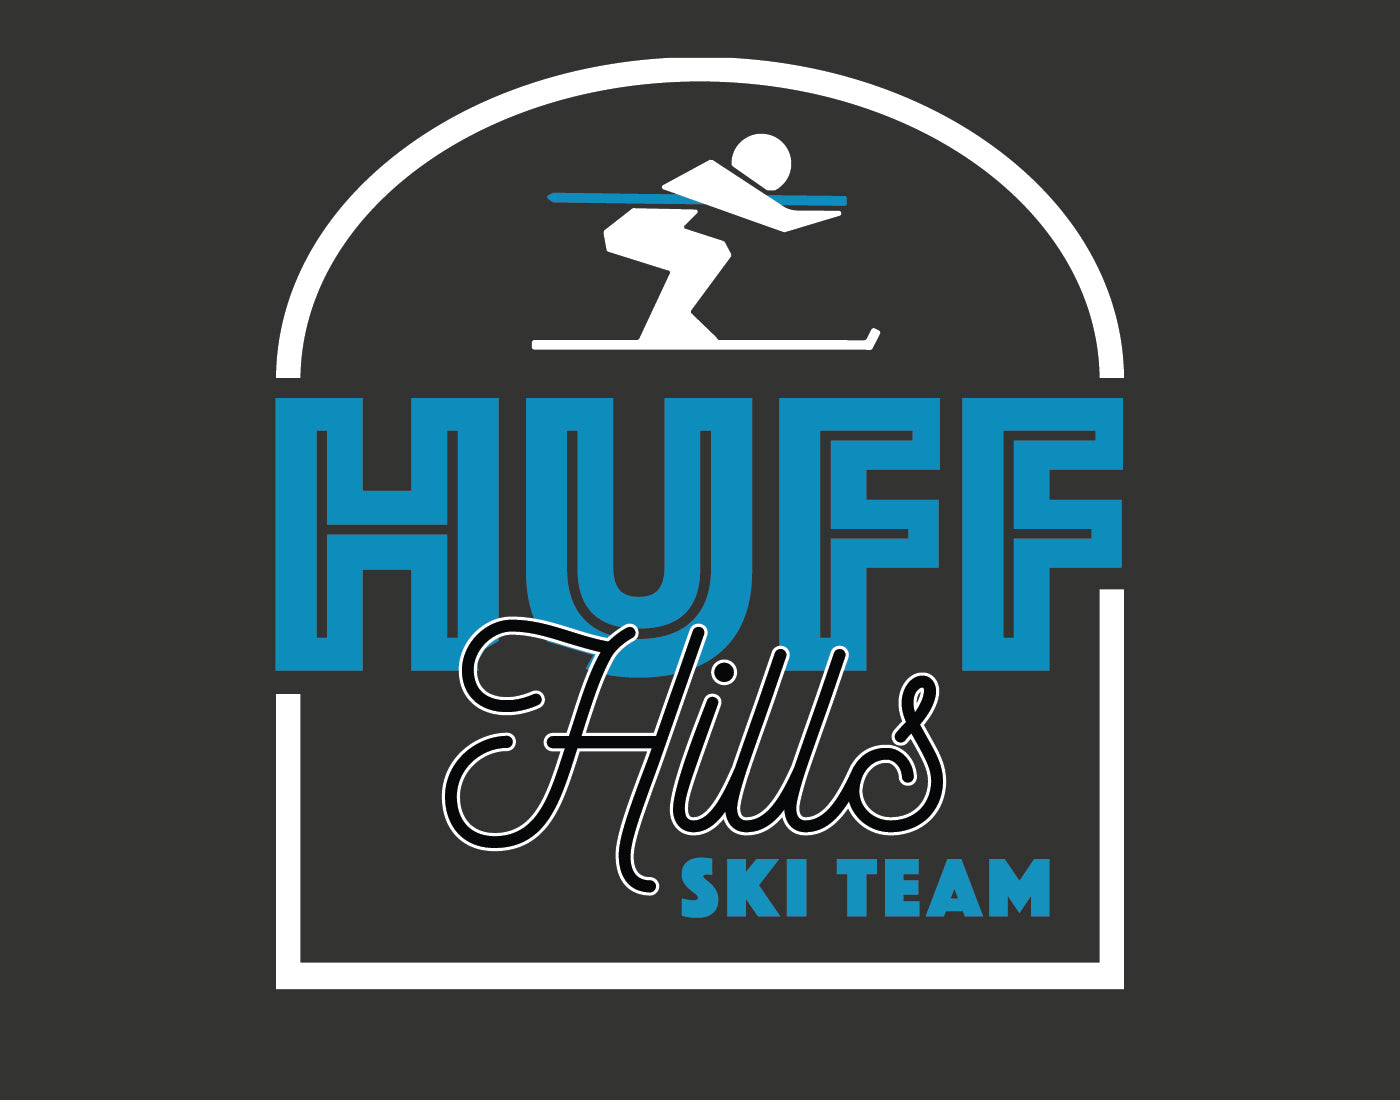 huff hills